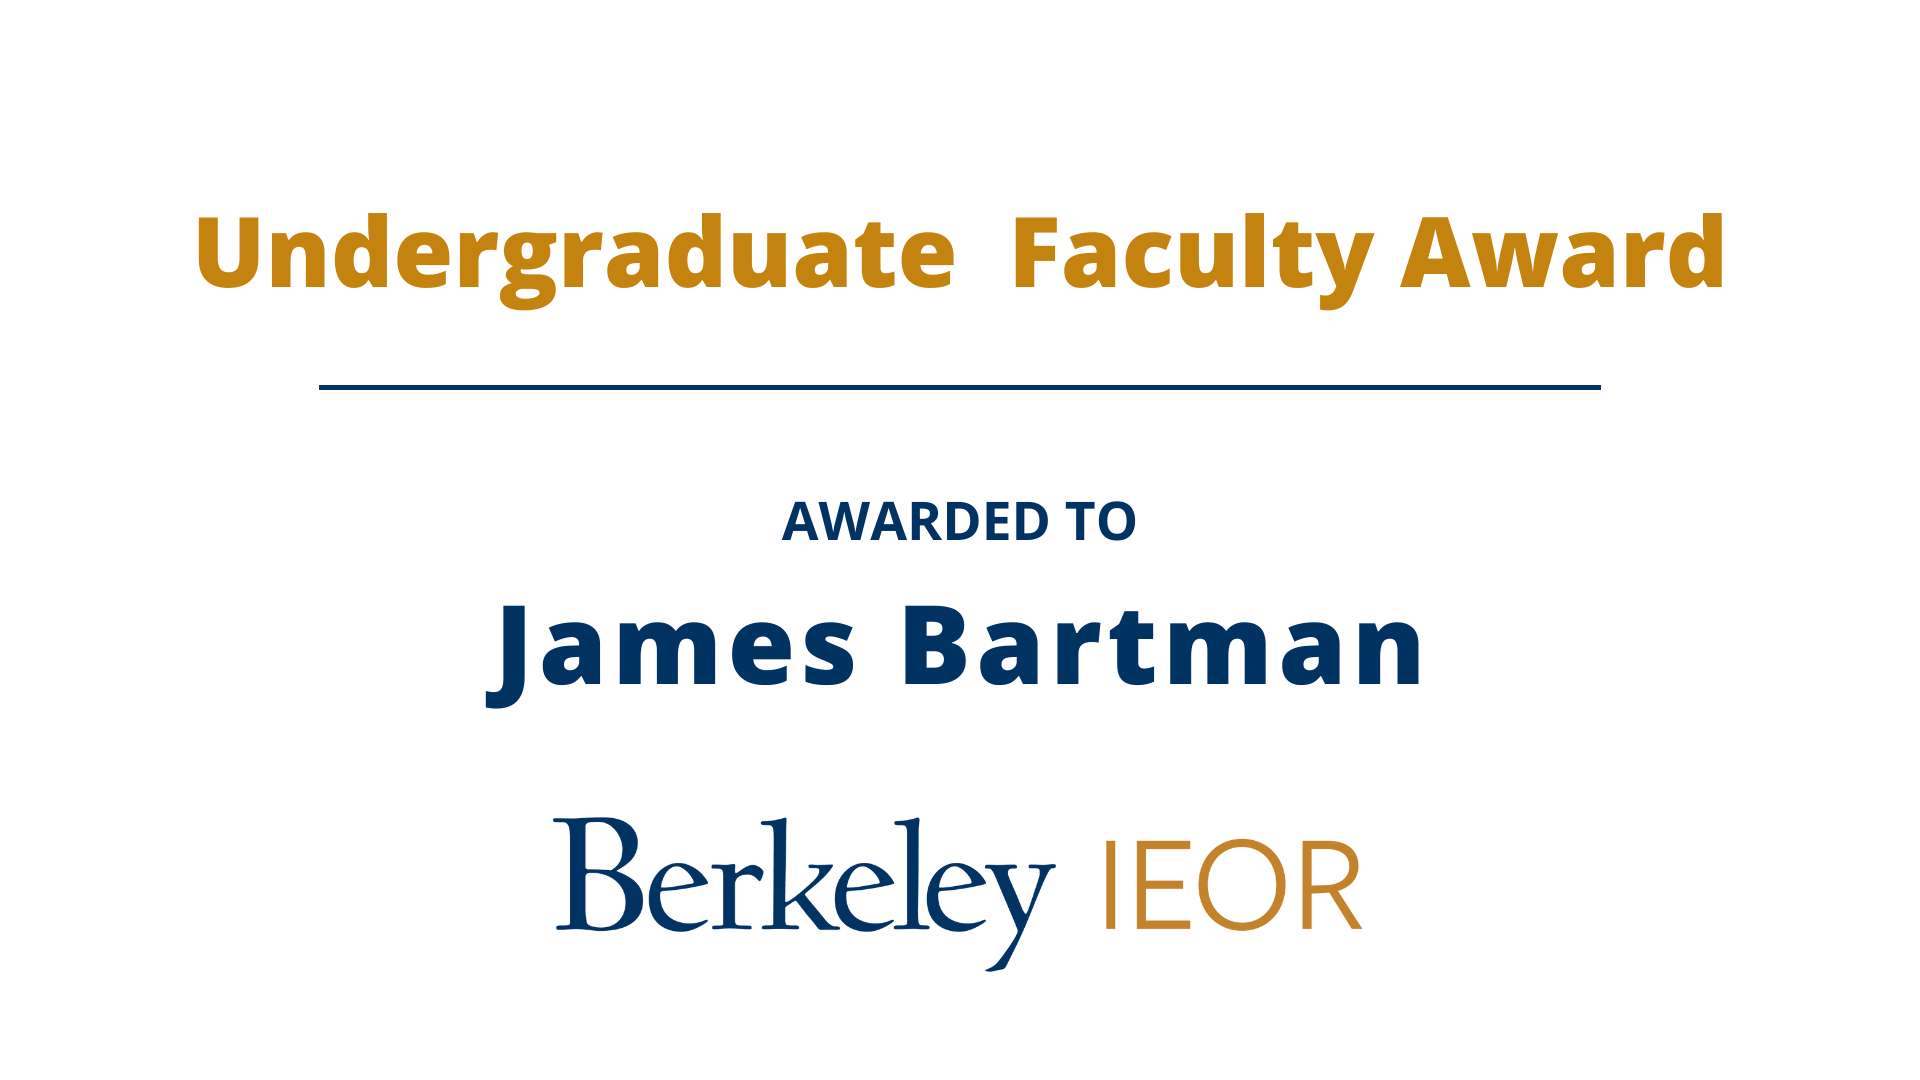 James Bartman, Undergraduate Faculty Award Recipient